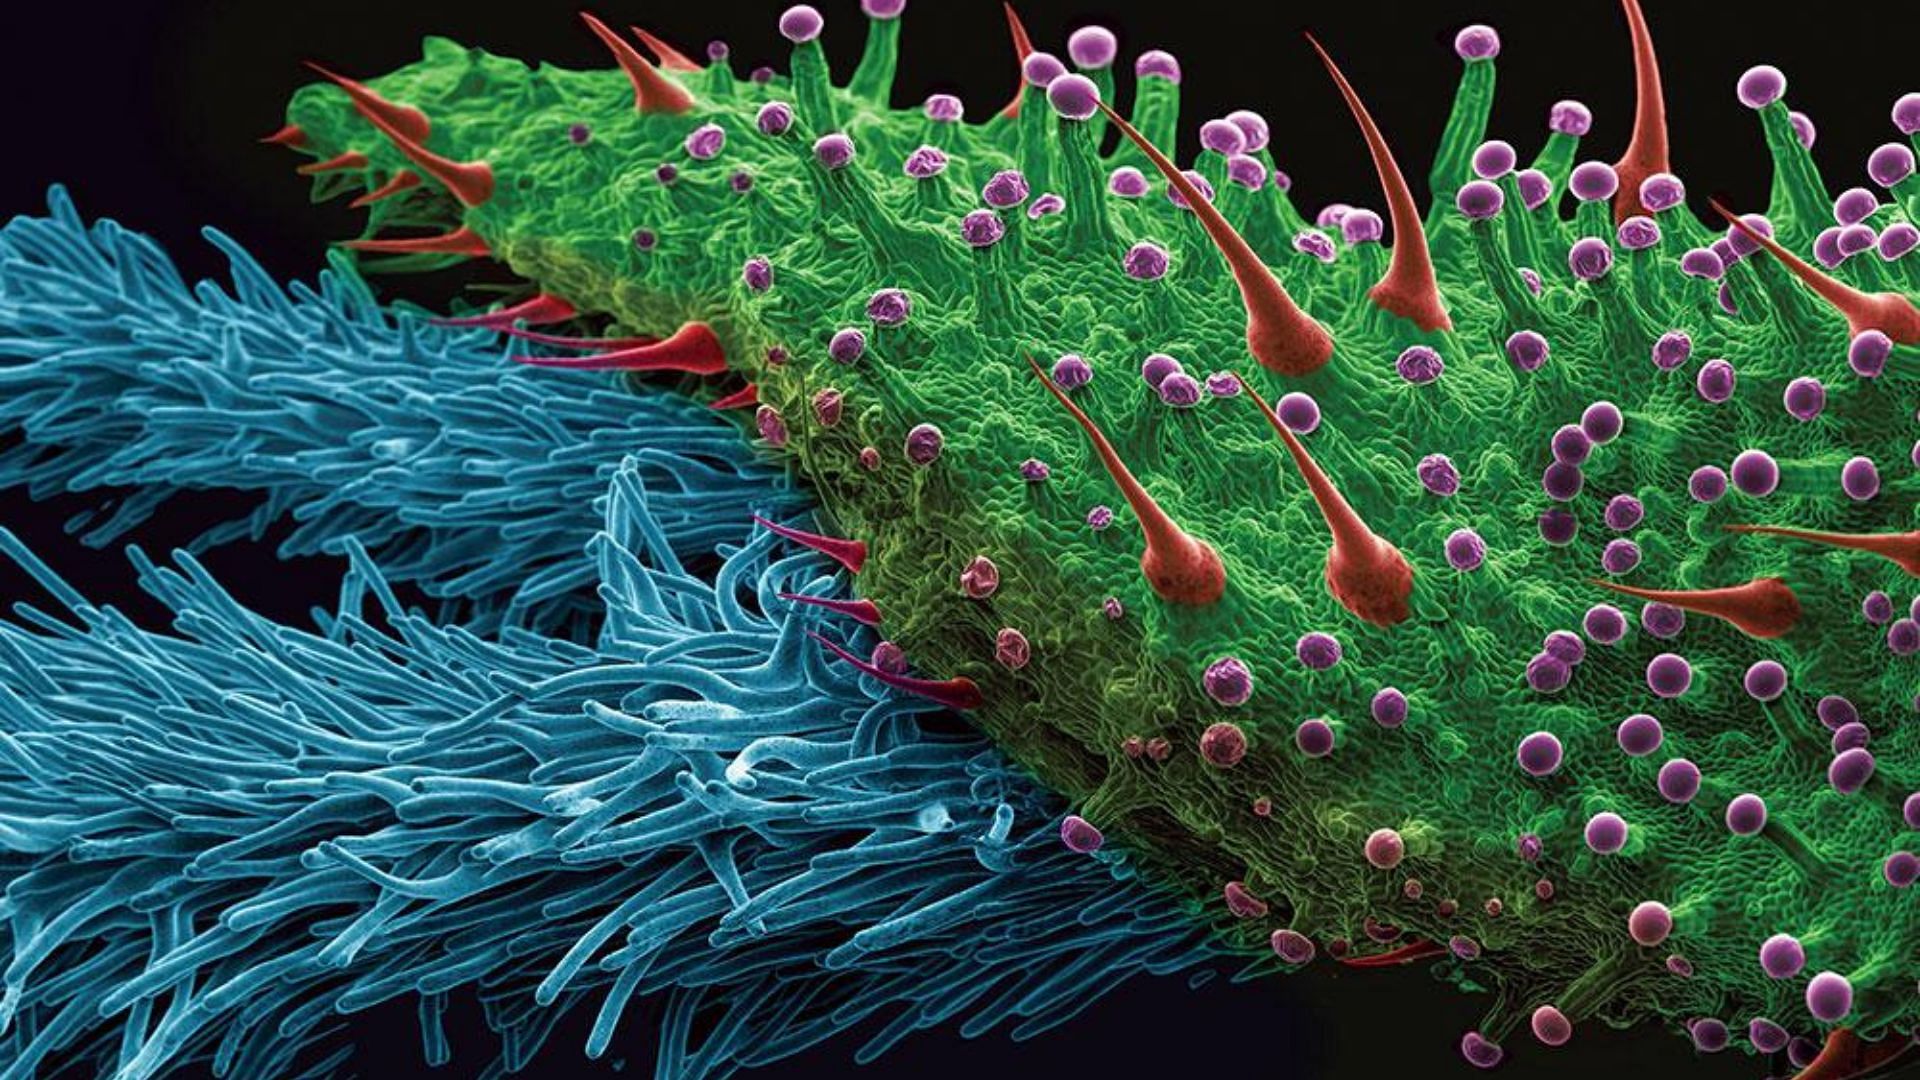 Cannabis trichomes under the electron microscope- Alchimia Grow Shop